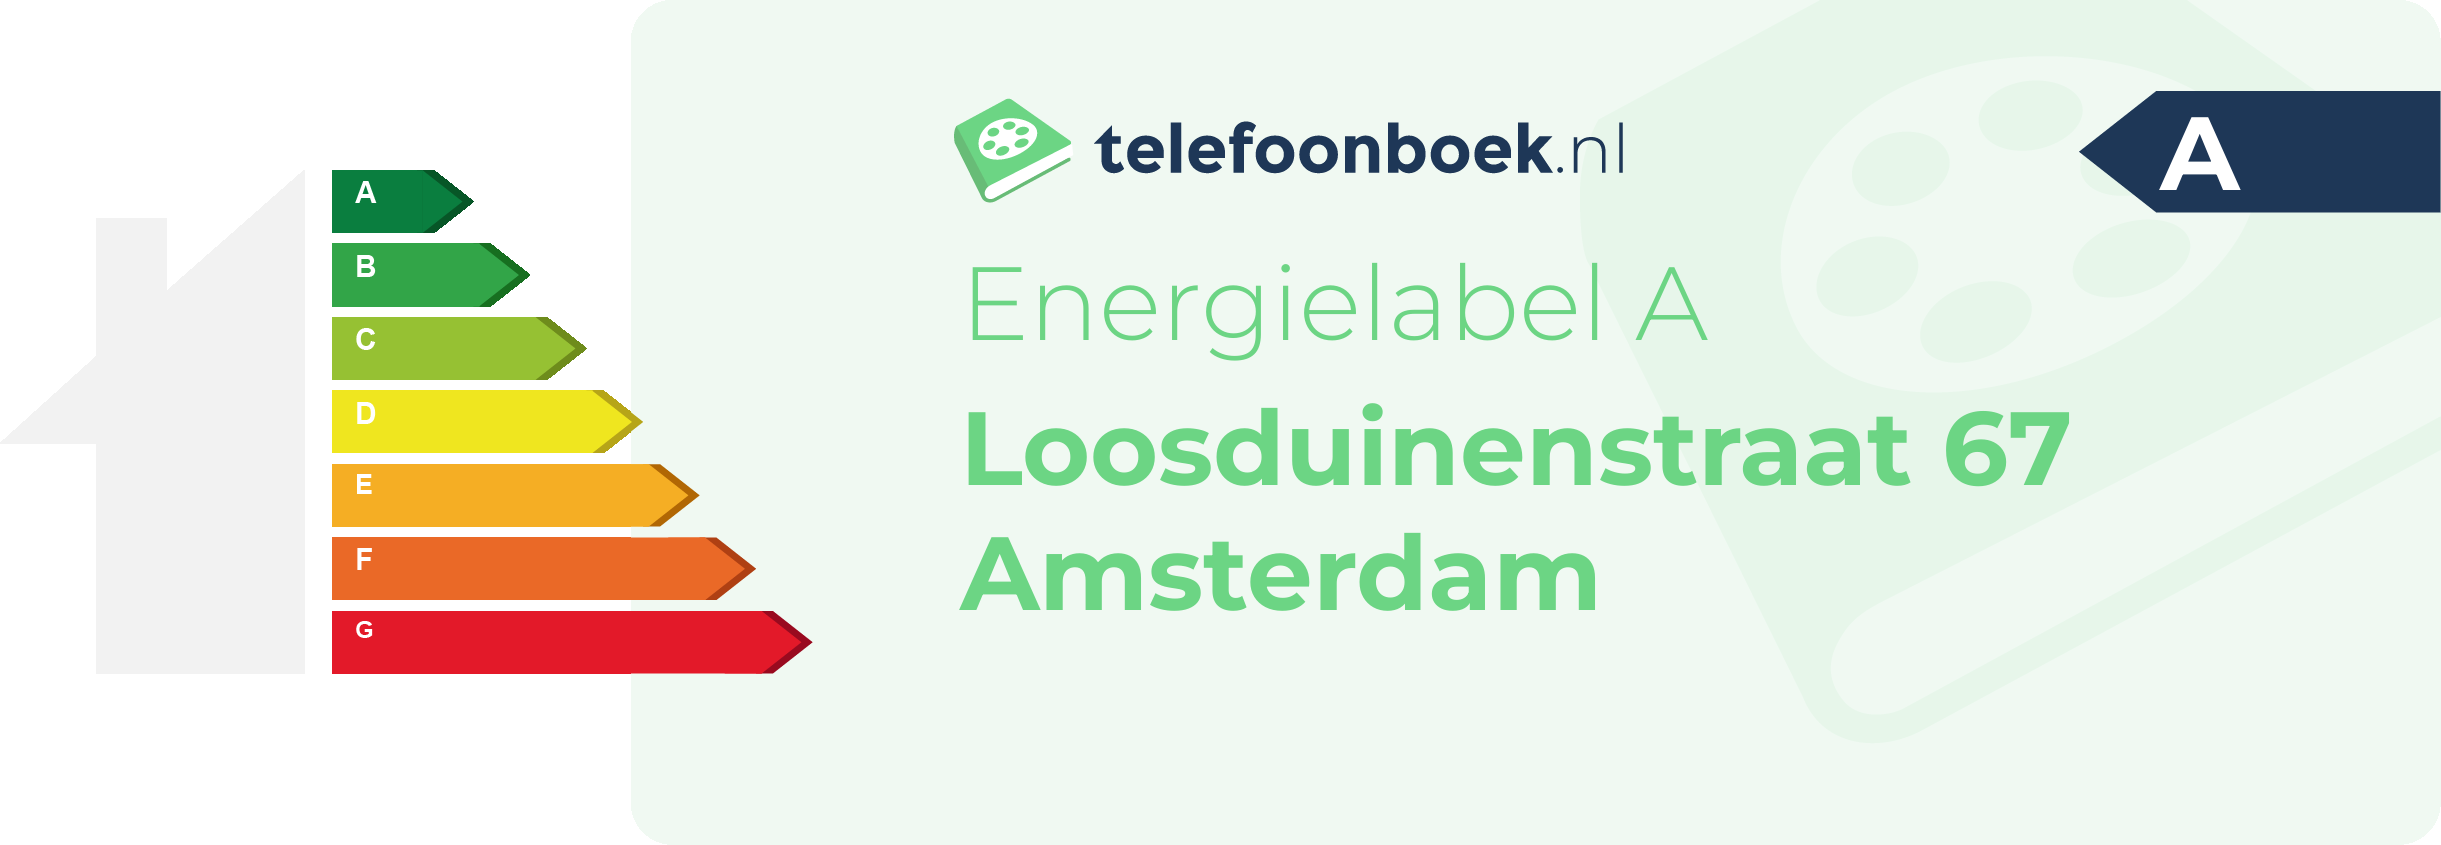 Energielabel Loosduinenstraat 67 Amsterdam